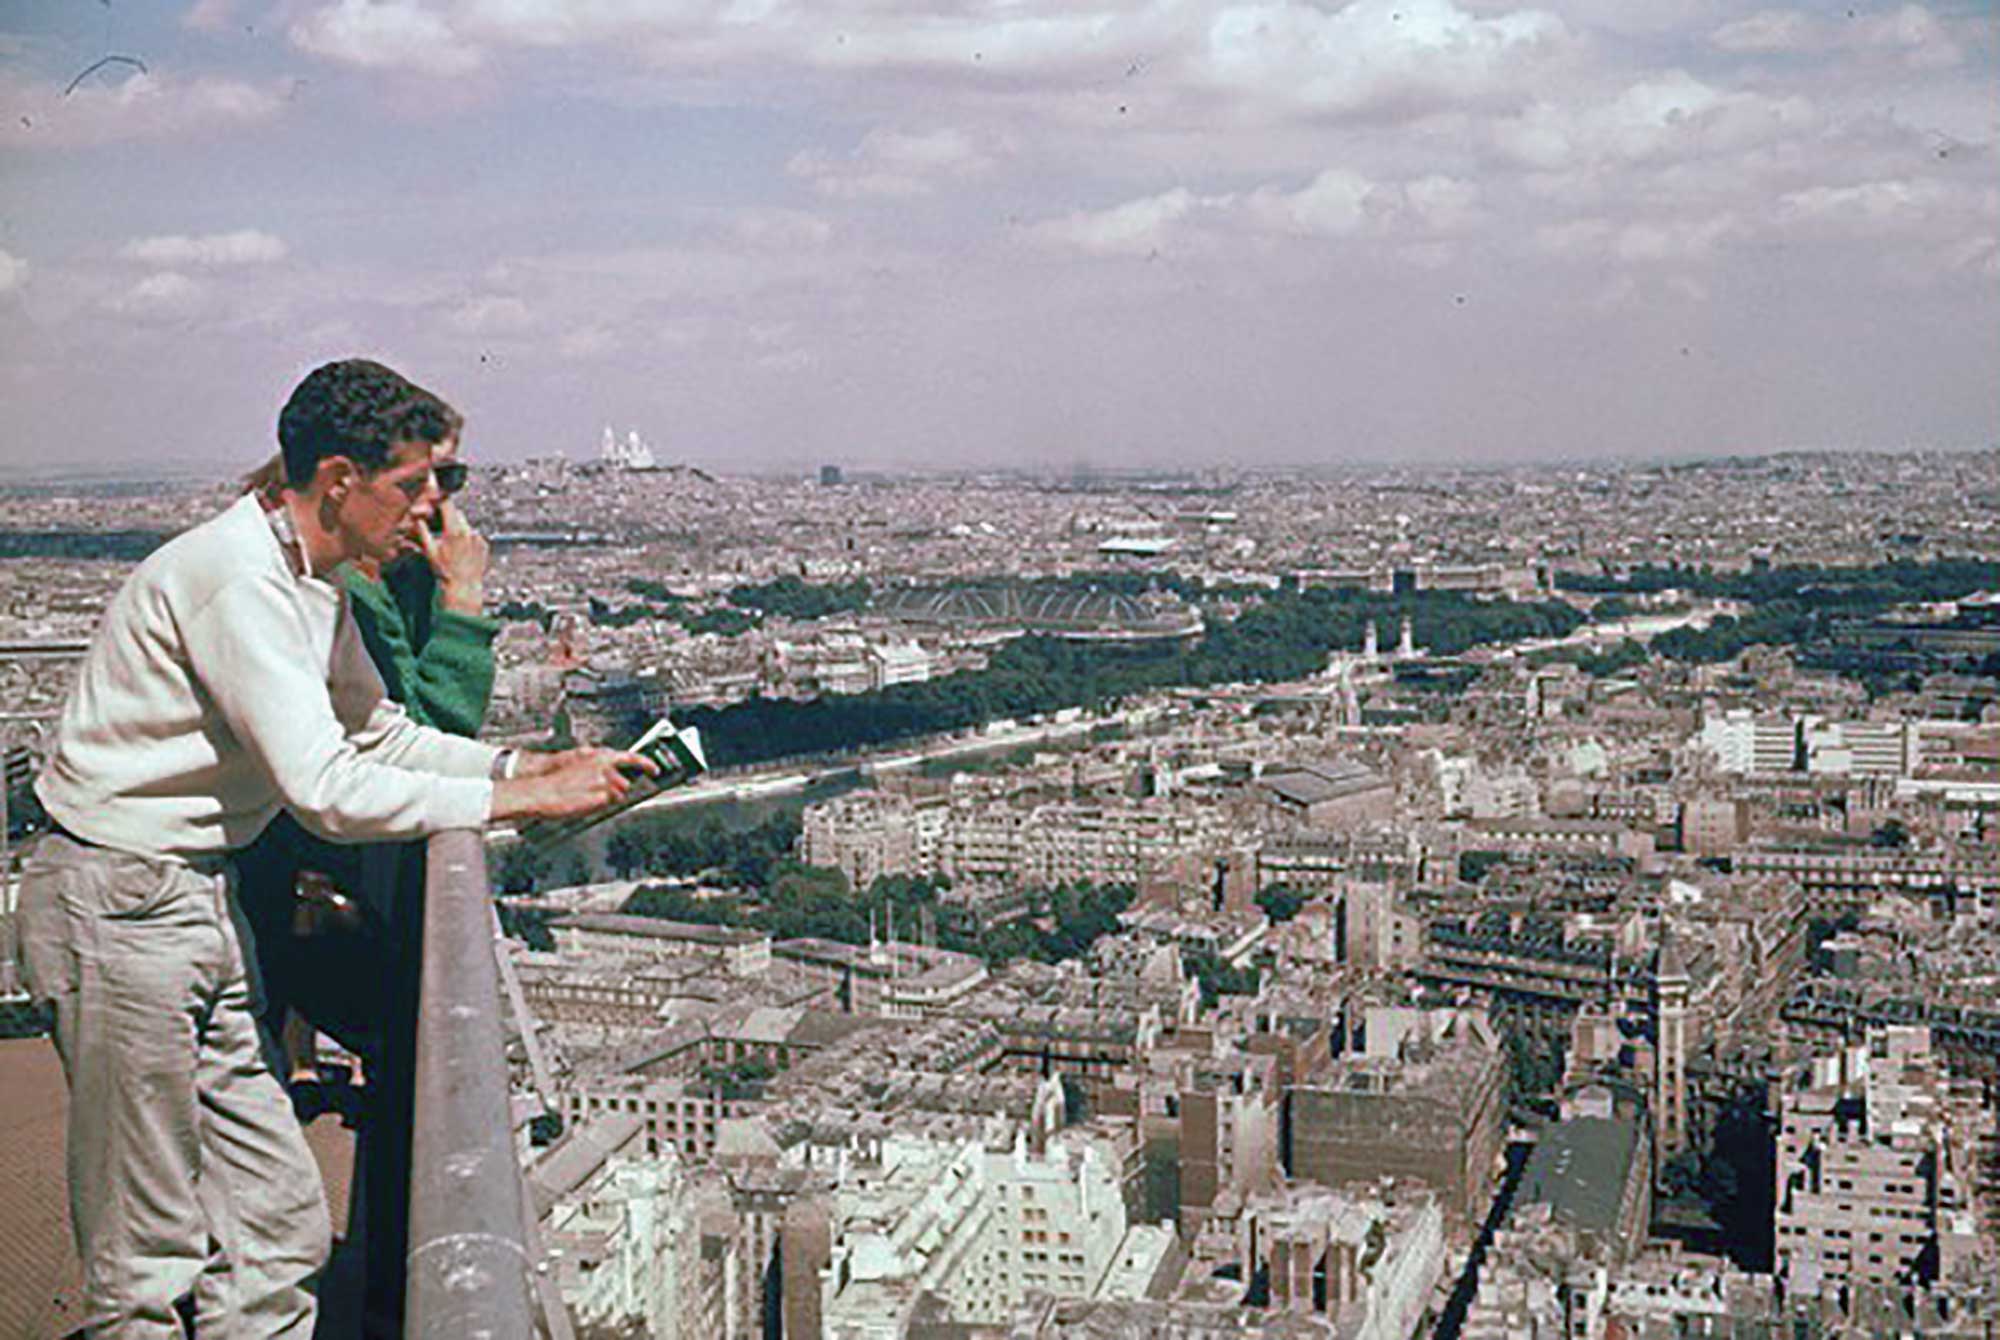 Ian McFarling surveys Paris